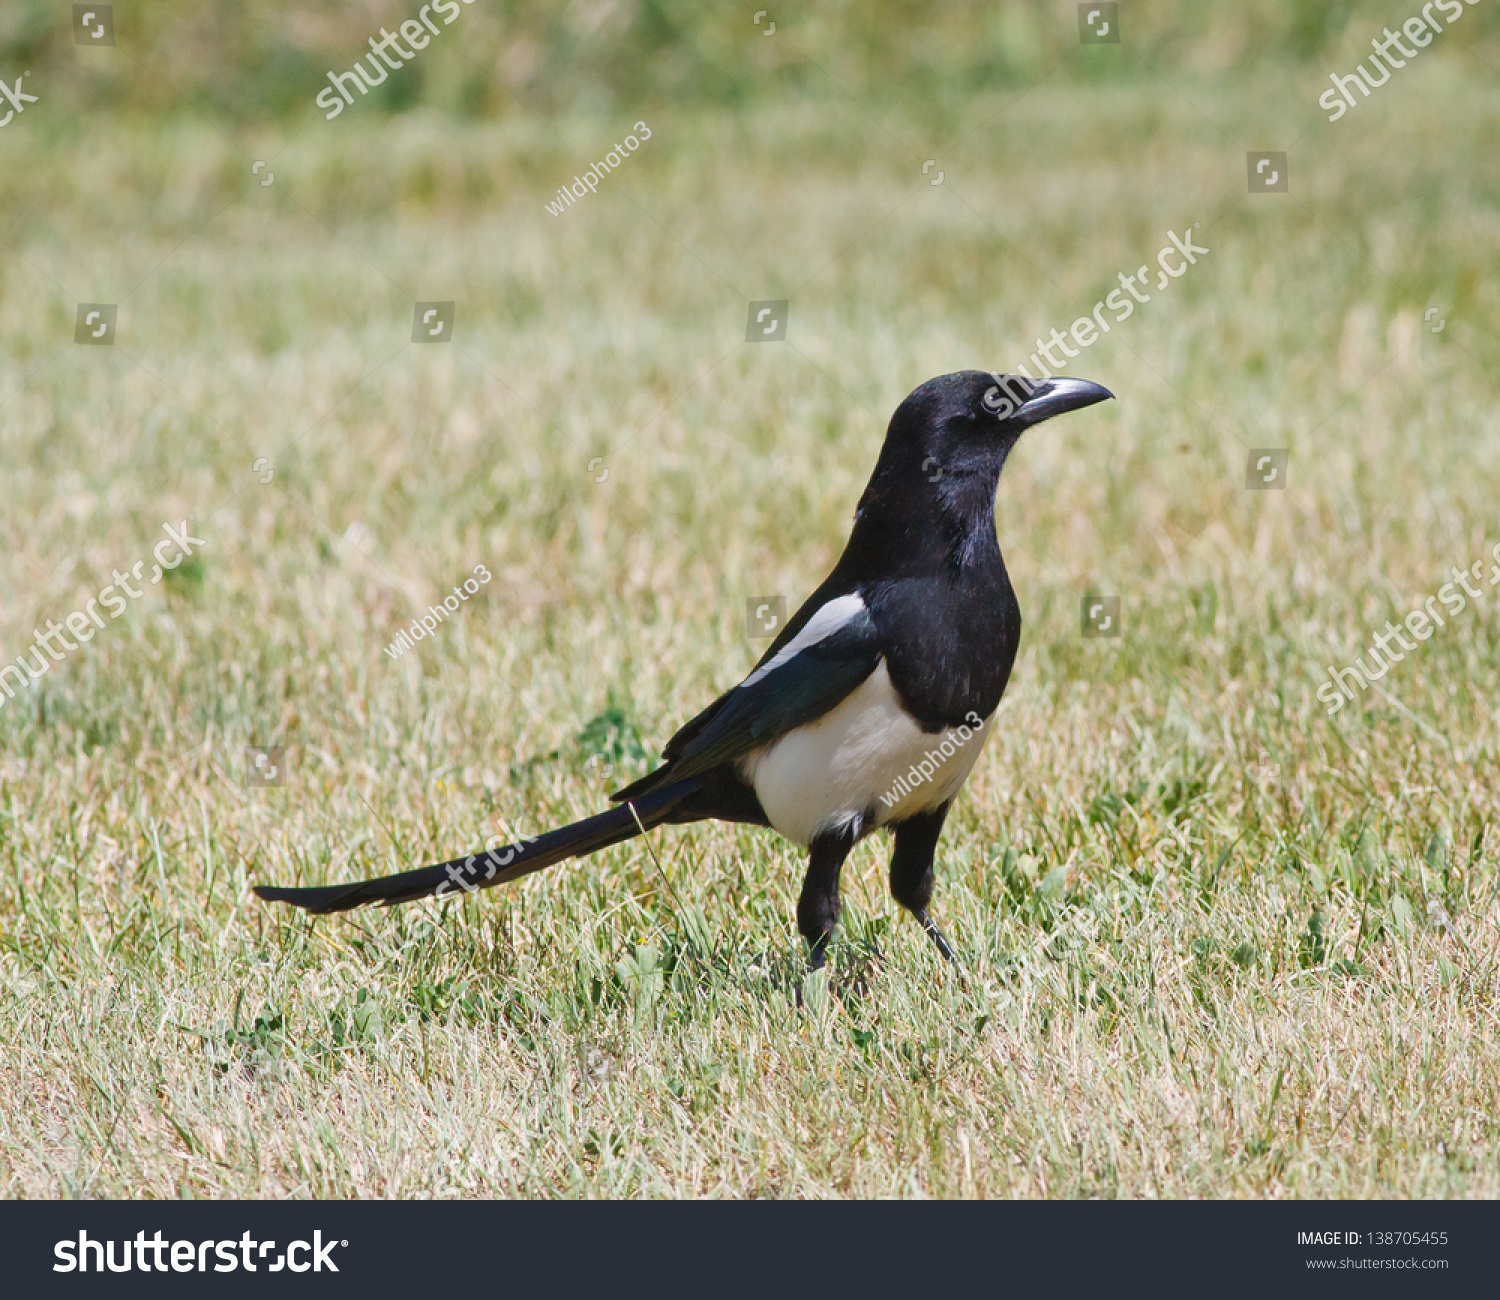 Black Billed Magpie Standing Short Grass Stock Photo 138705455 ...